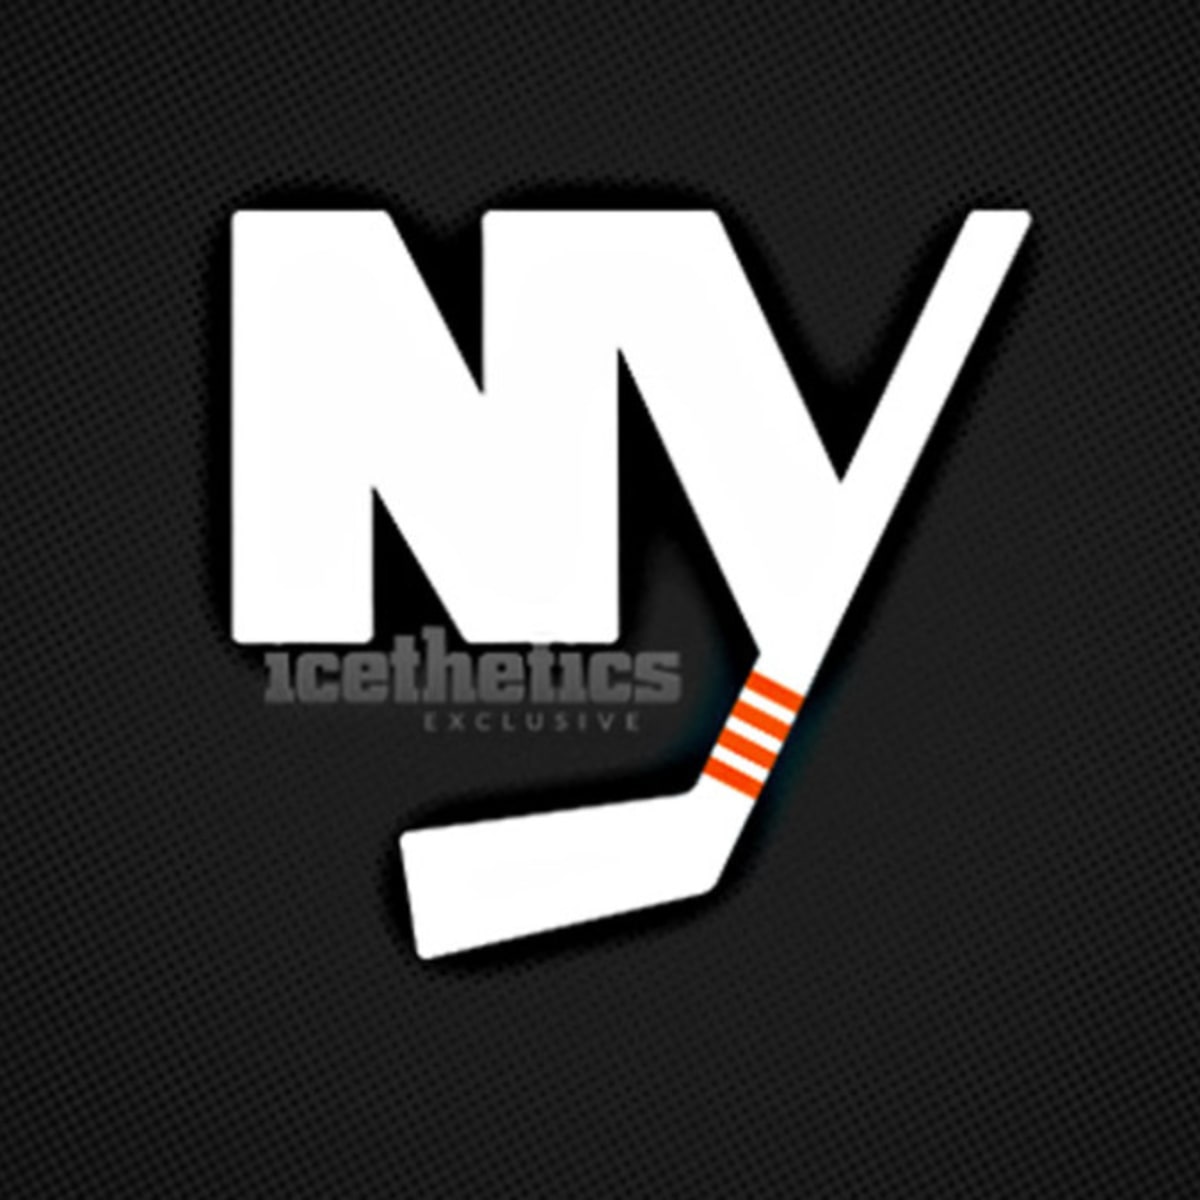 Was the 2014 Stadium Series jersey the best NY Islanders alternate?